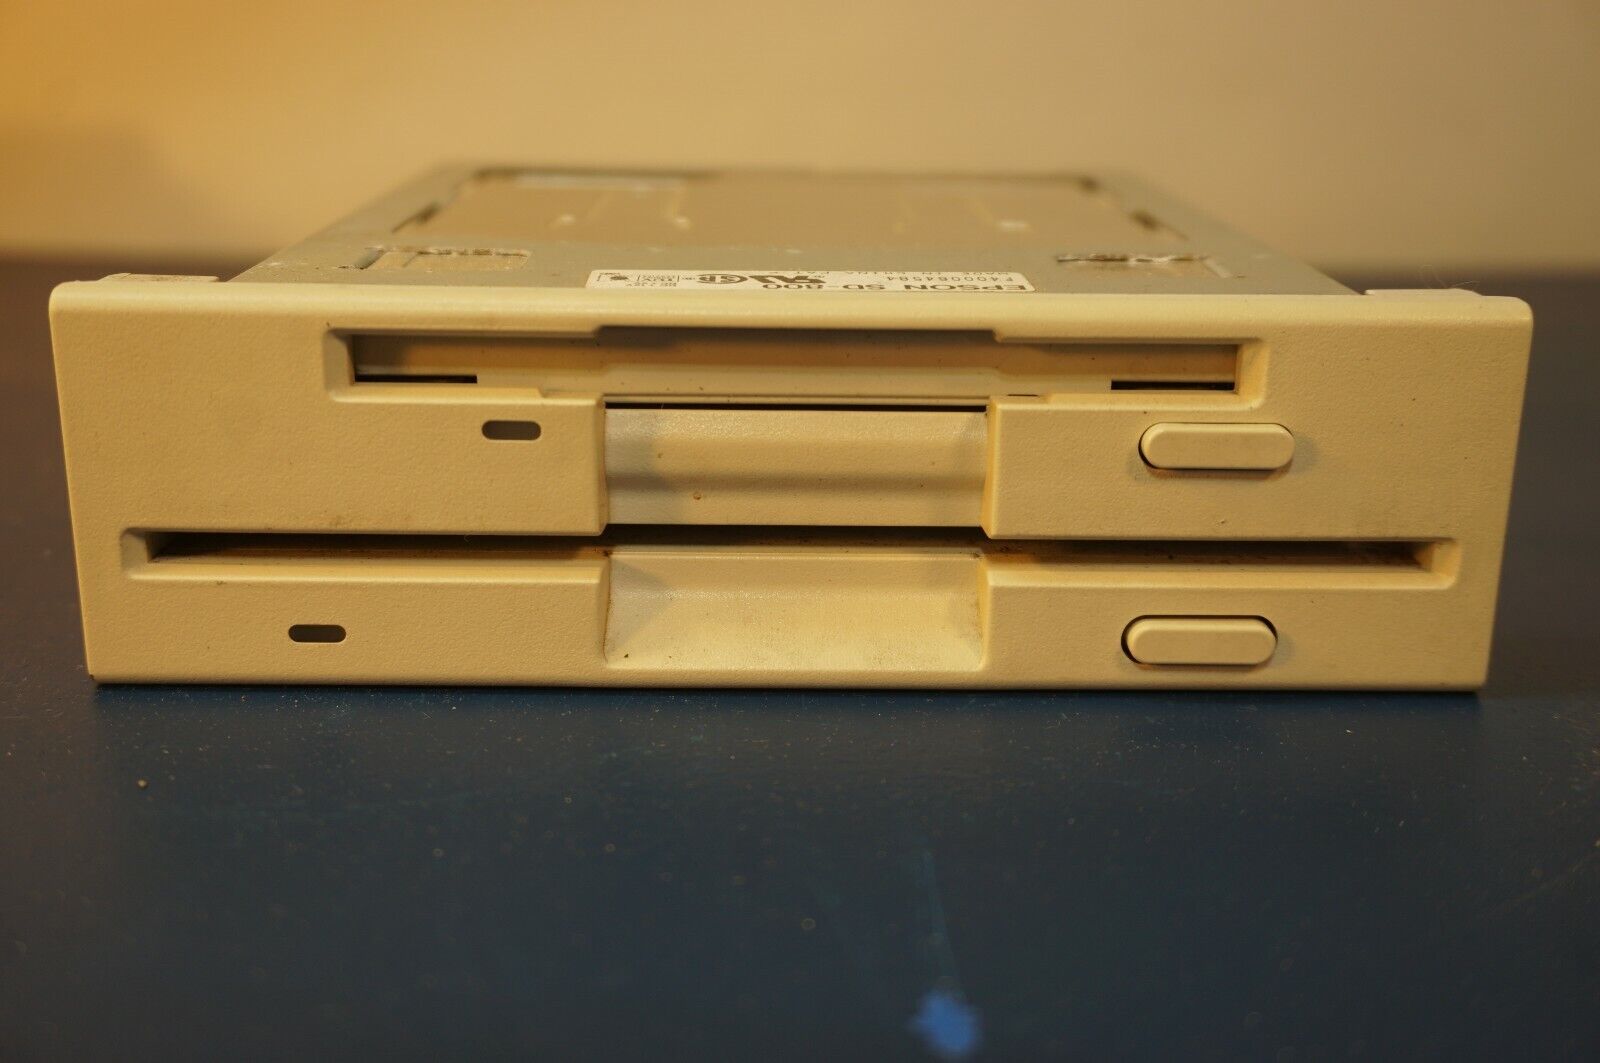 San Diego Mall Epson SD-800 dual floppy drive Max 66% OFF